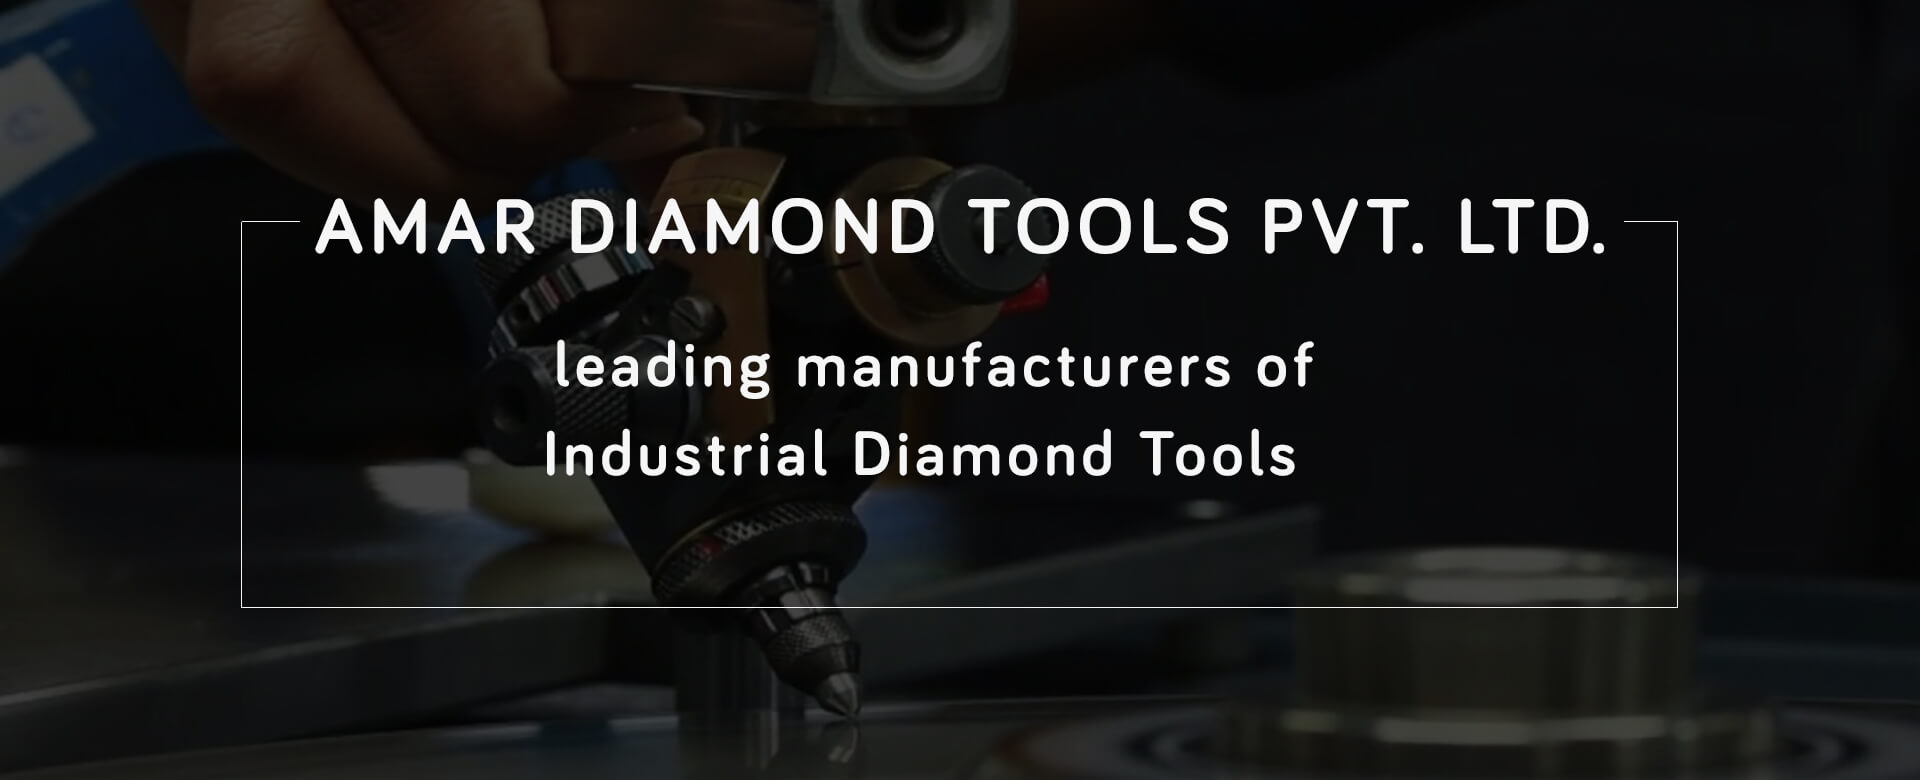 amar-diamond-tools-pvt-ltd